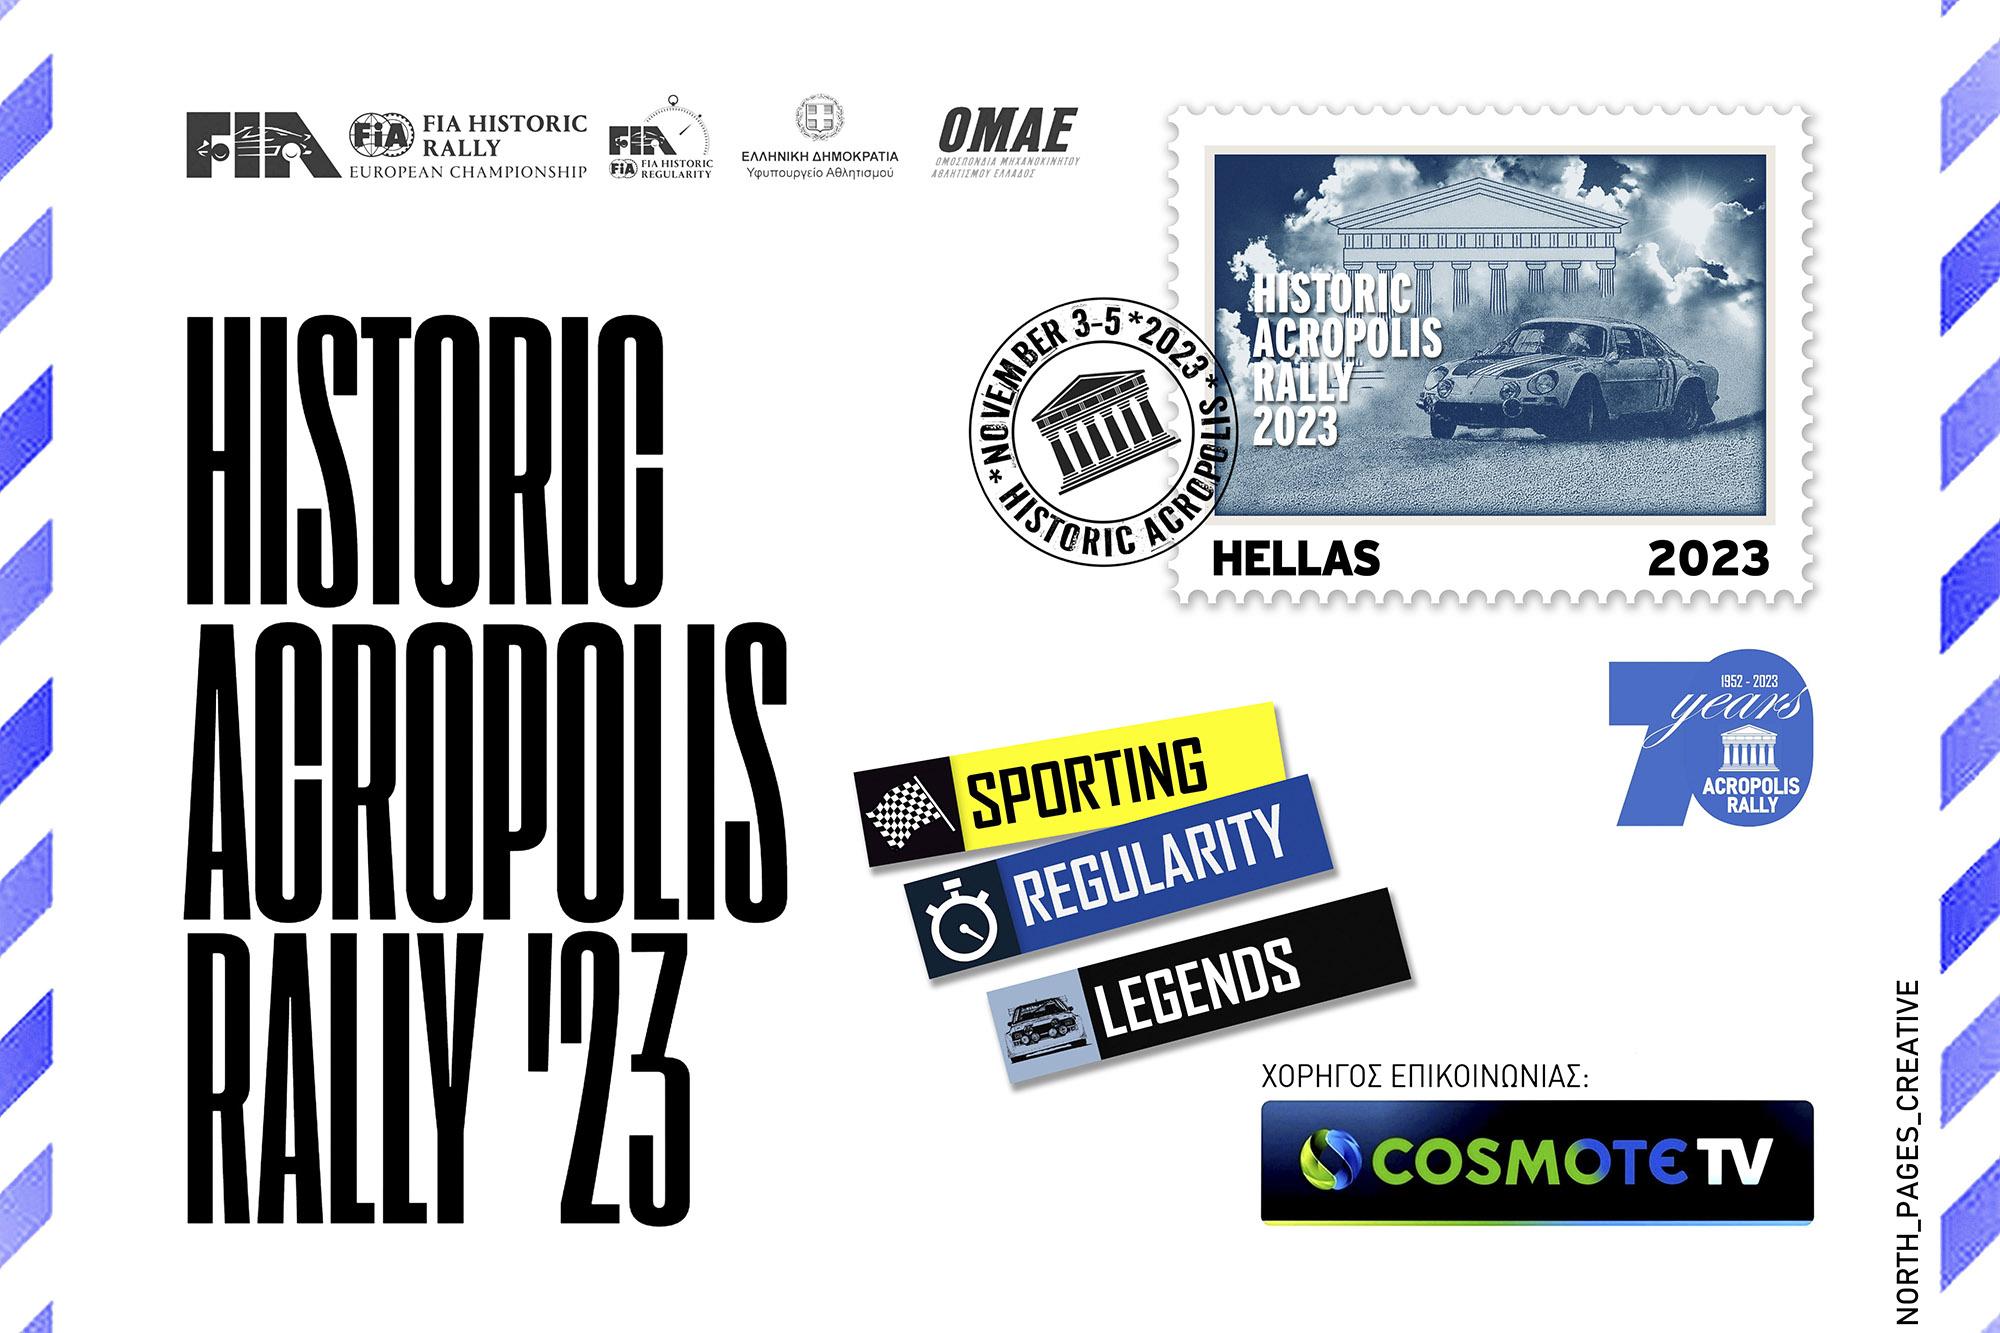 Historic Acropolis Rally 2023: Επιστροφή στο Ευρωπαϊκό Πρωτάθλημα Ράλλυ